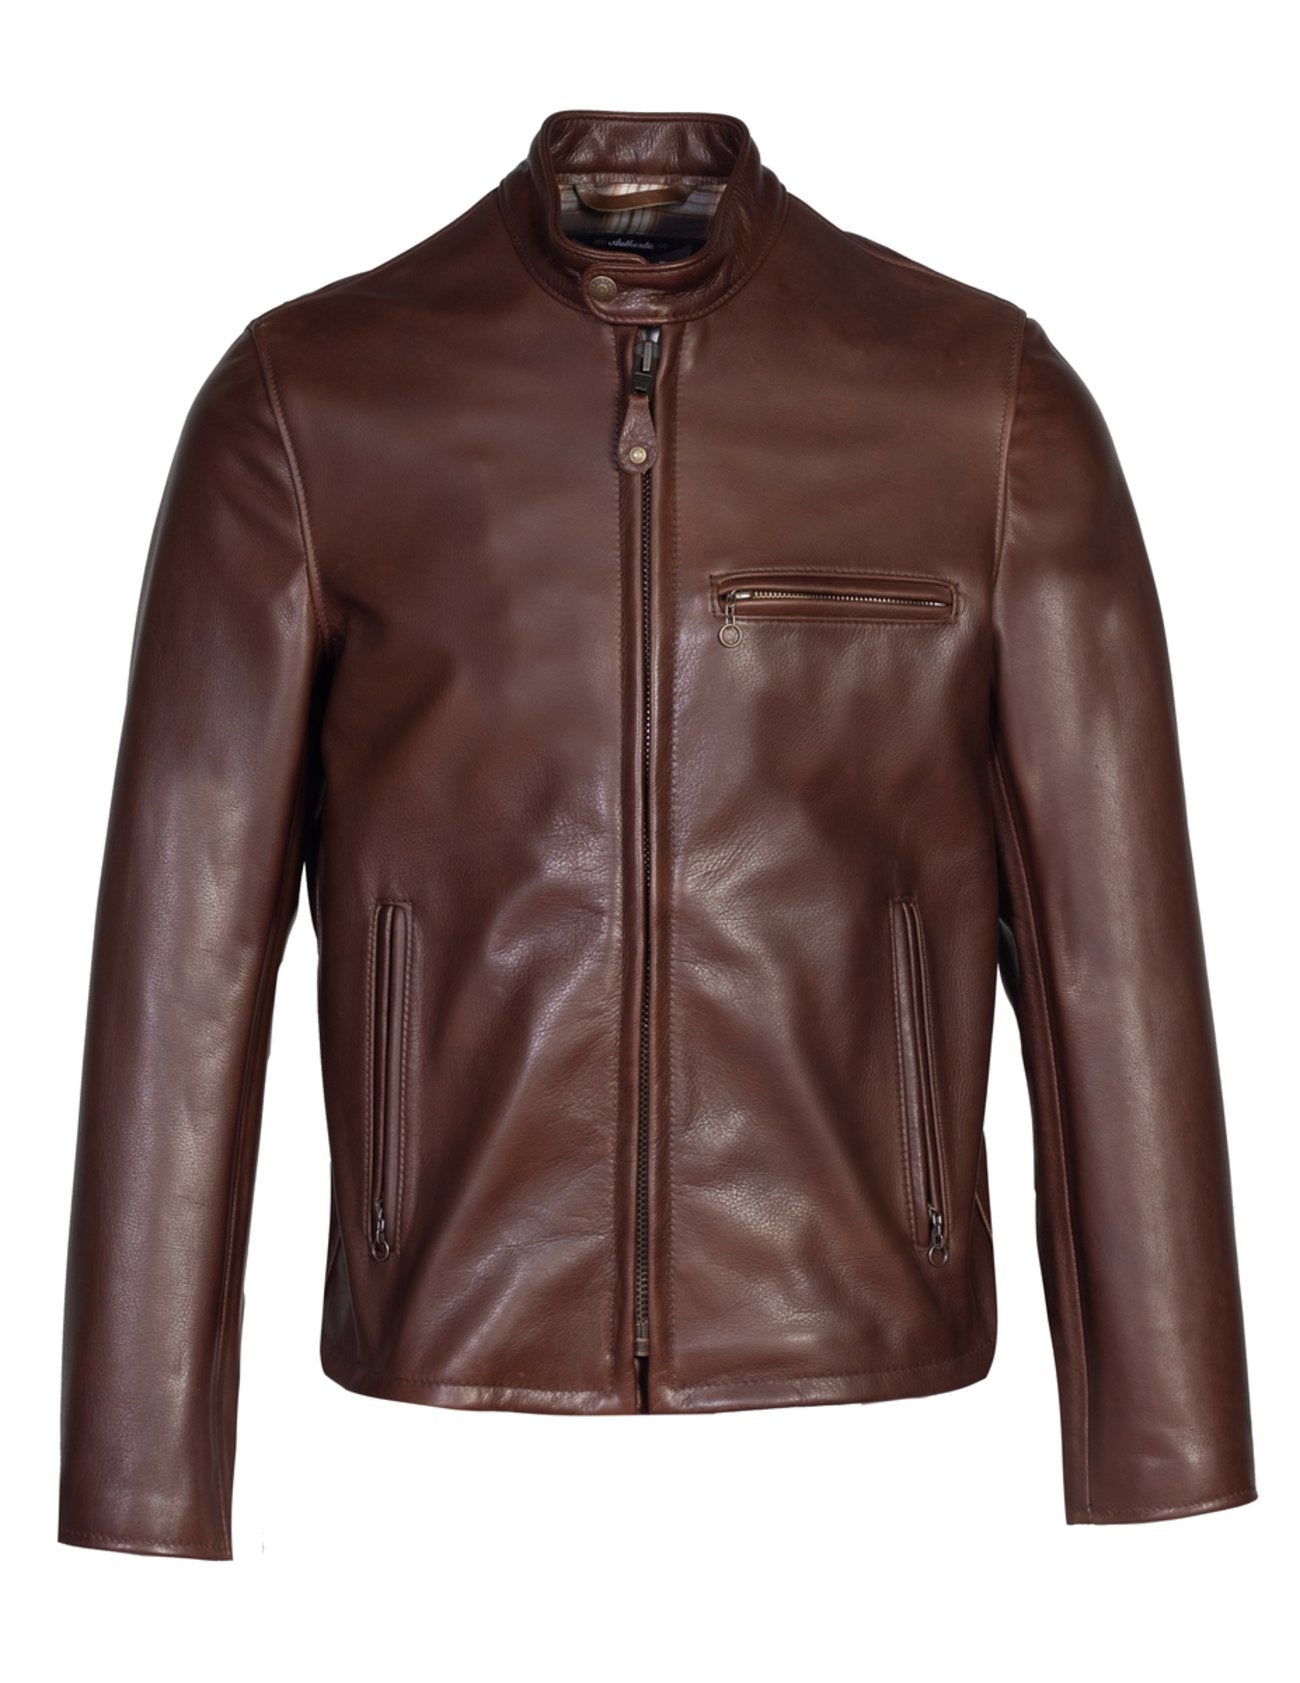 Schott NYC 530 Cafe Racer Leather Jacket